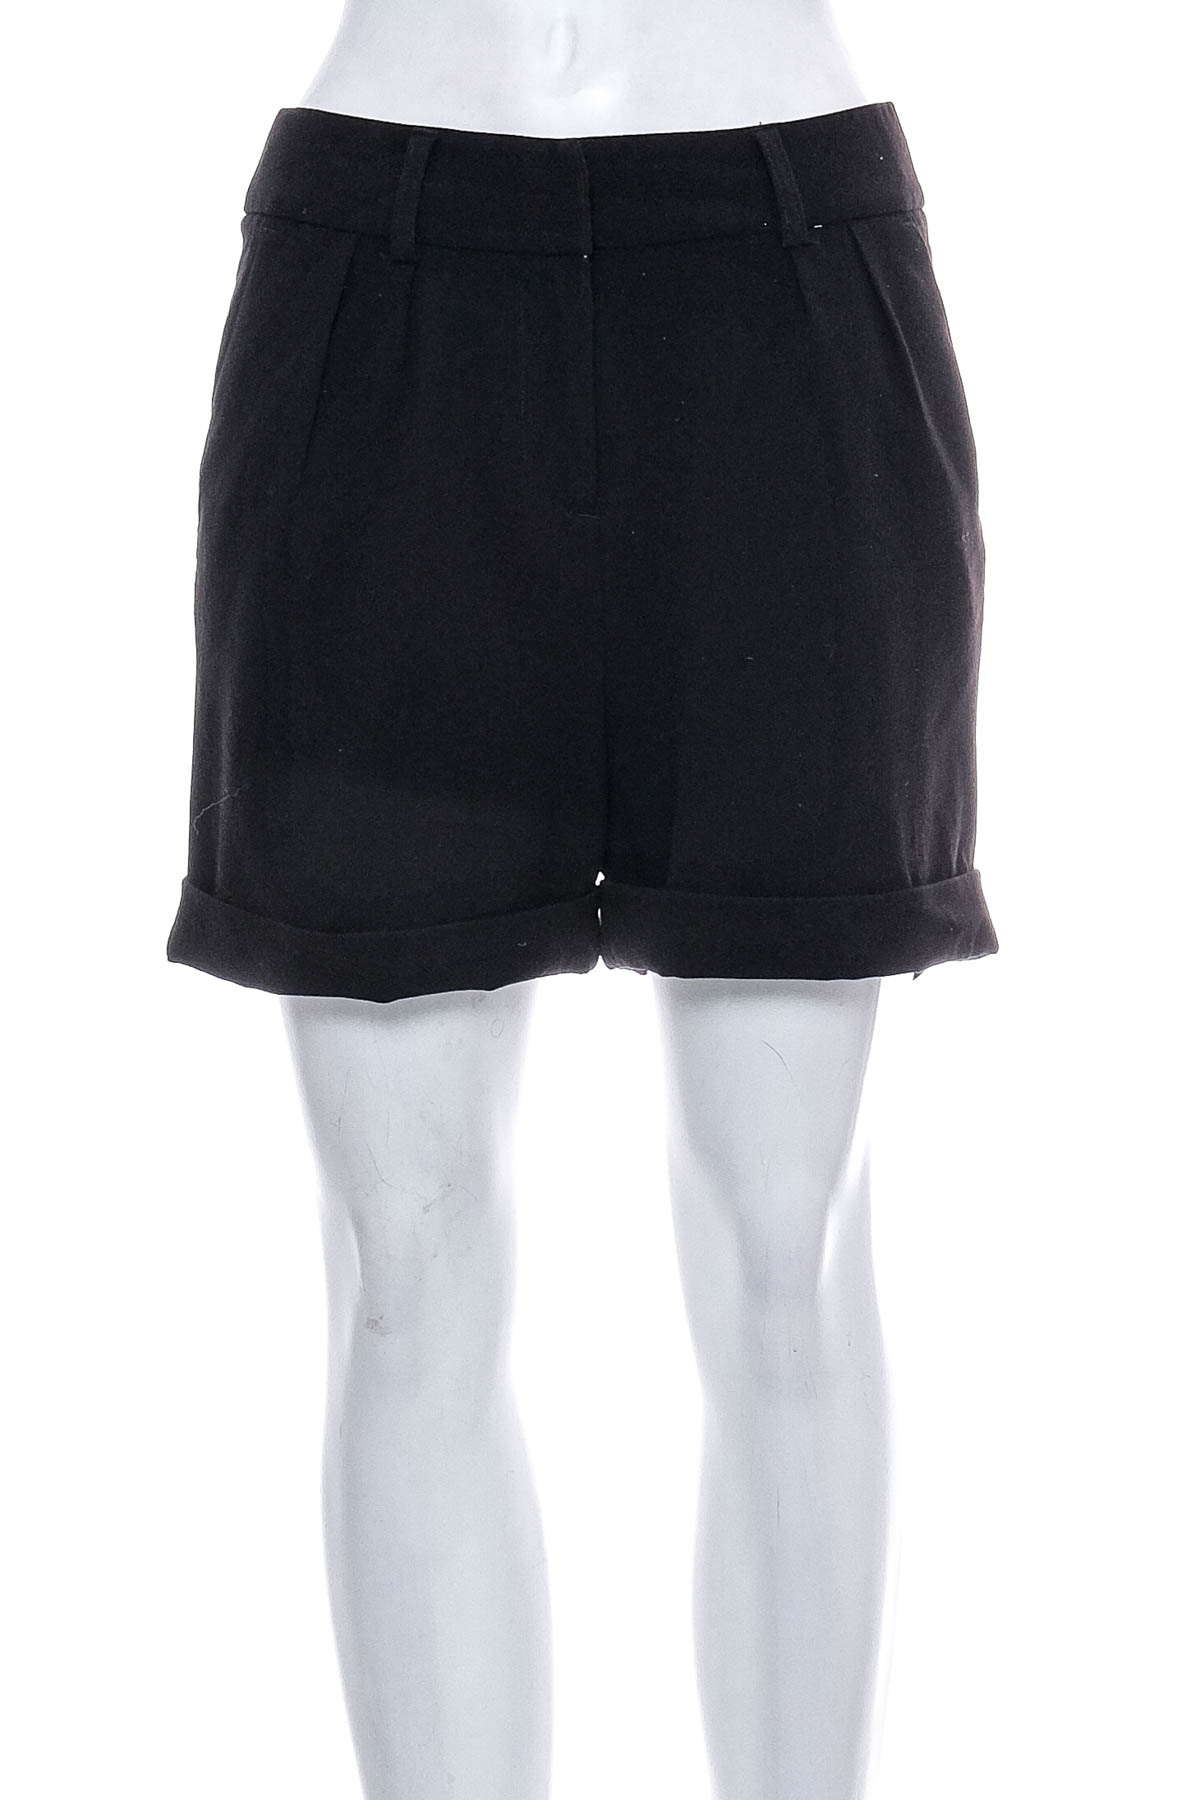 Female shorts - Madonna - 0